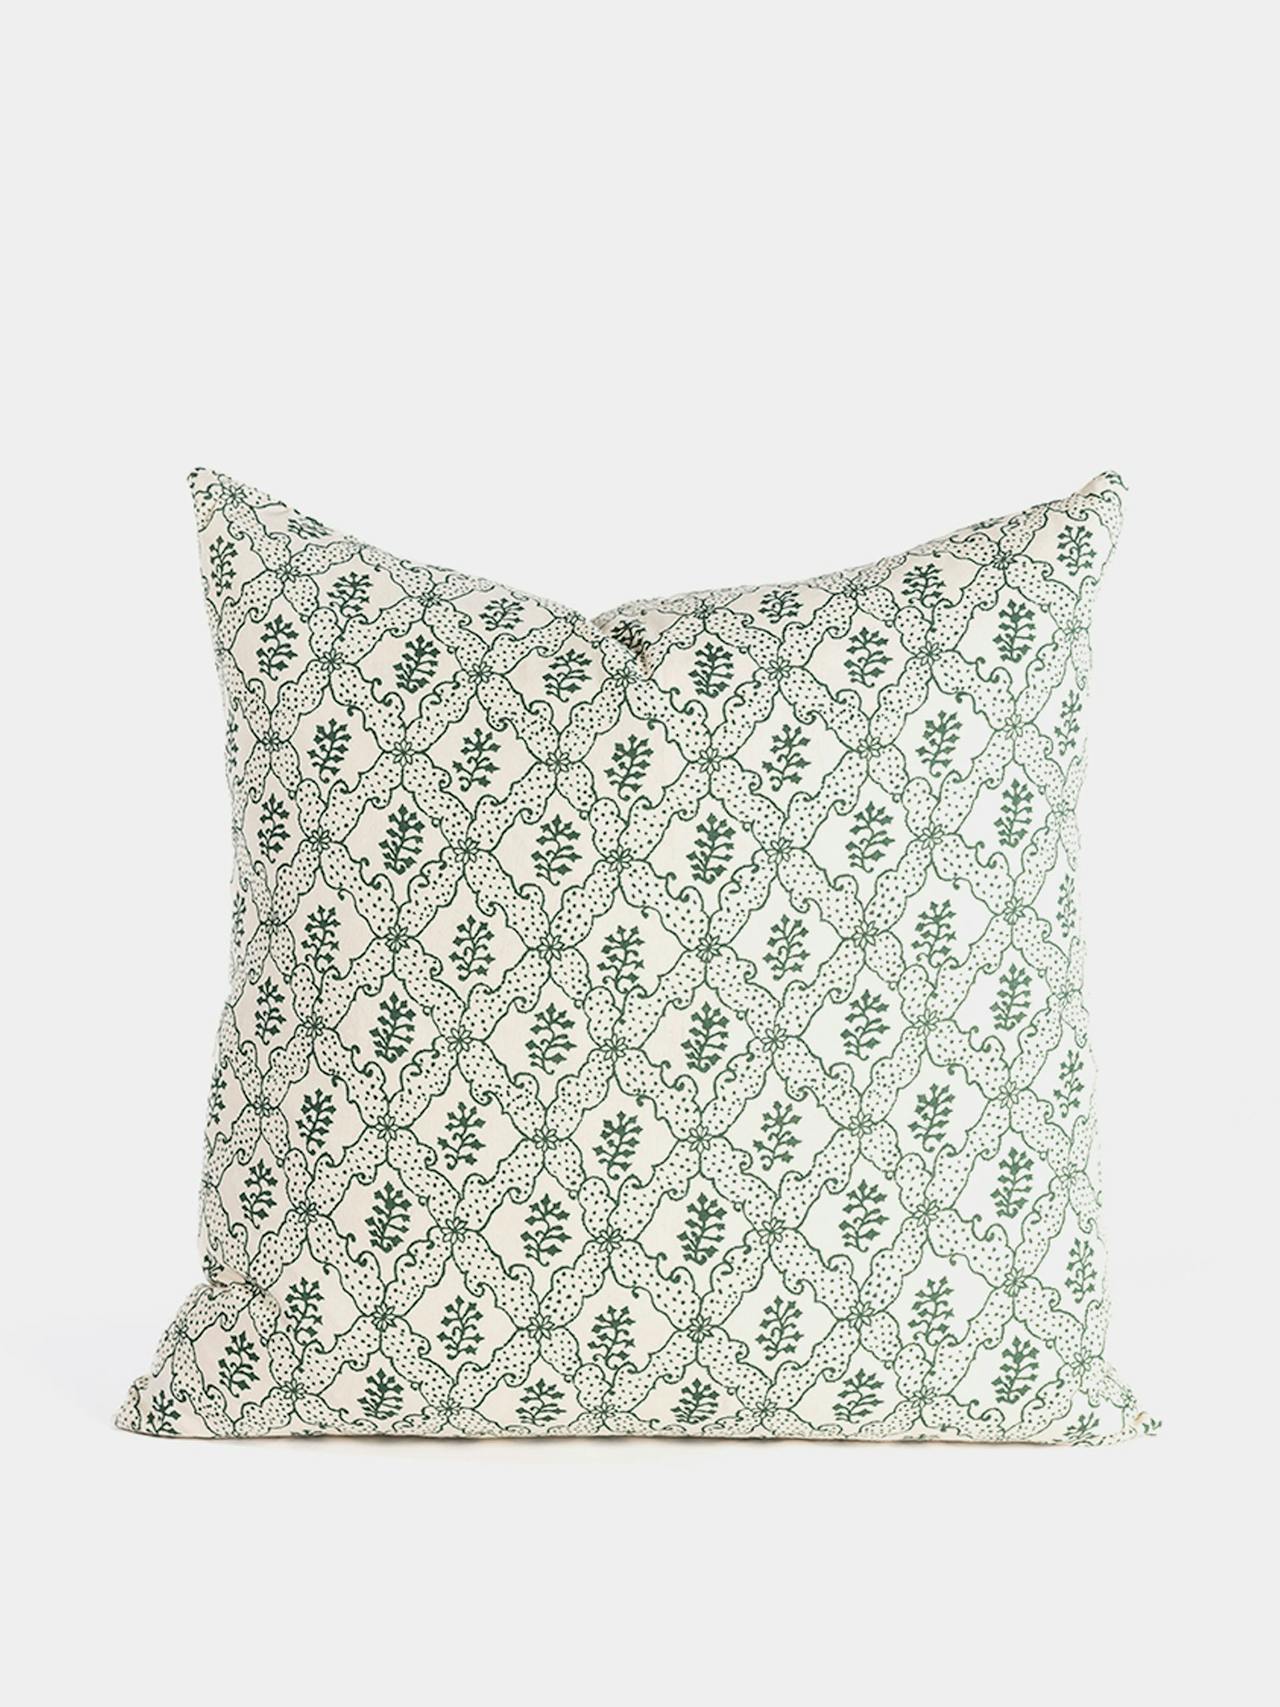 Lattice flower scatter cushion in green